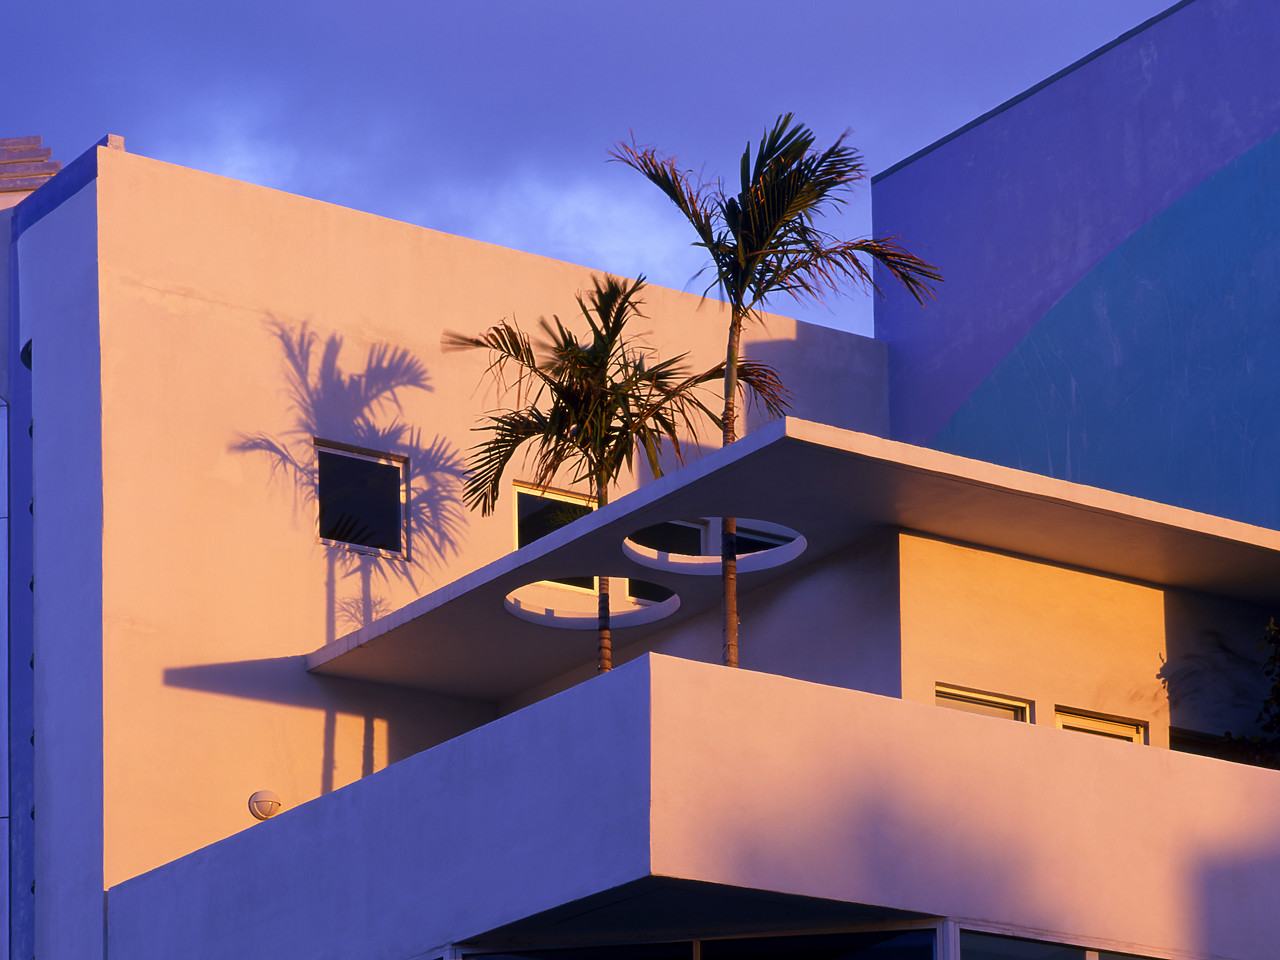 #010195-1 - Art Deco Building & Palm Trees, Miami, Florida, USA